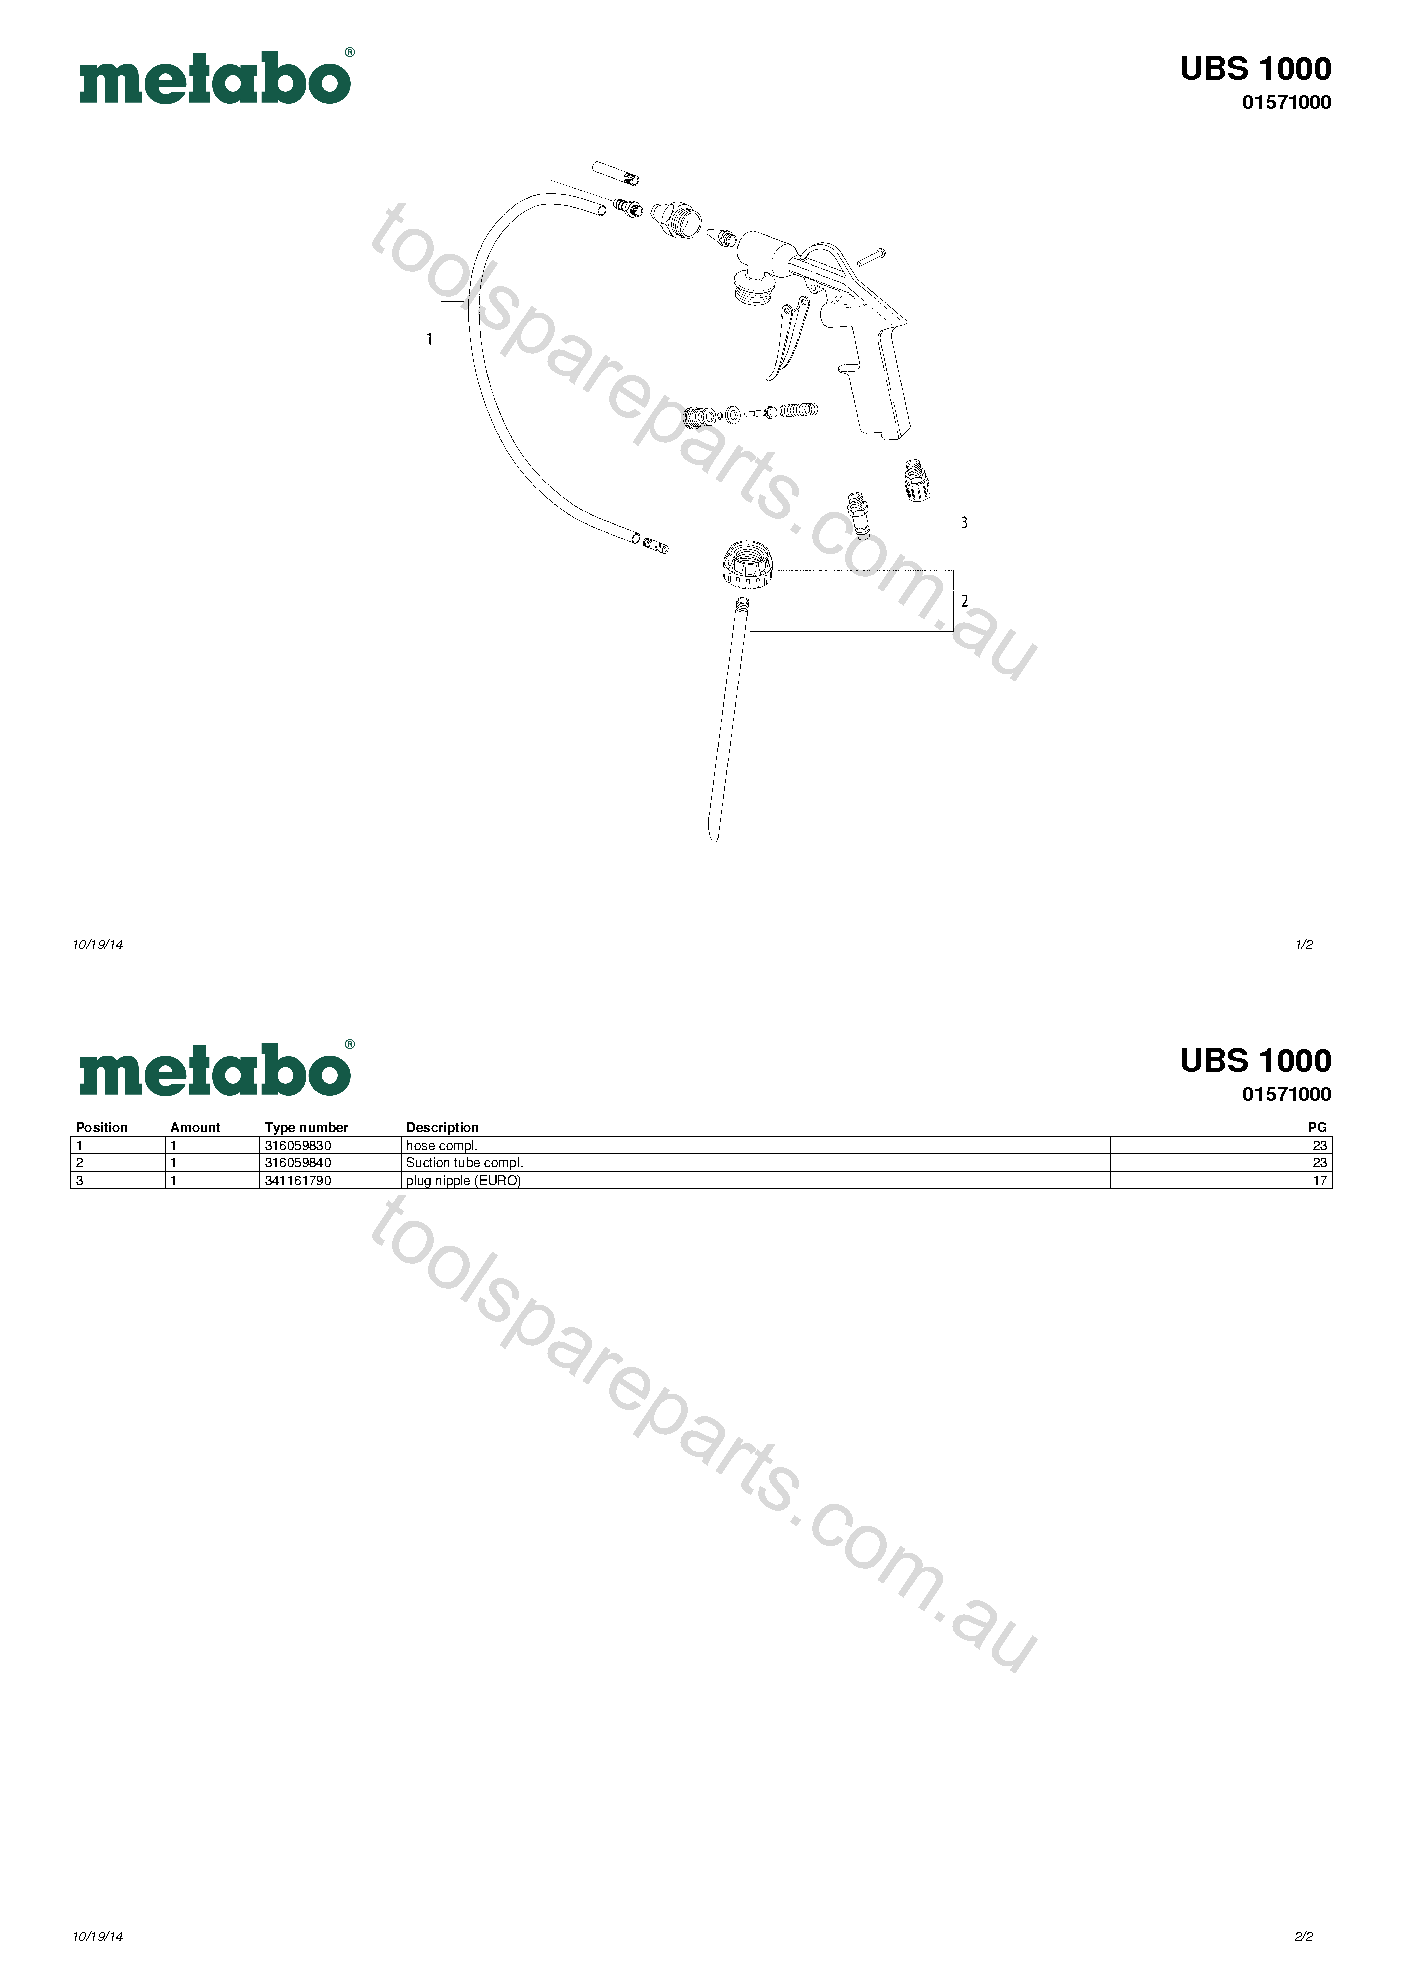 Metabo UBS 1000 01571000  Diagram 1